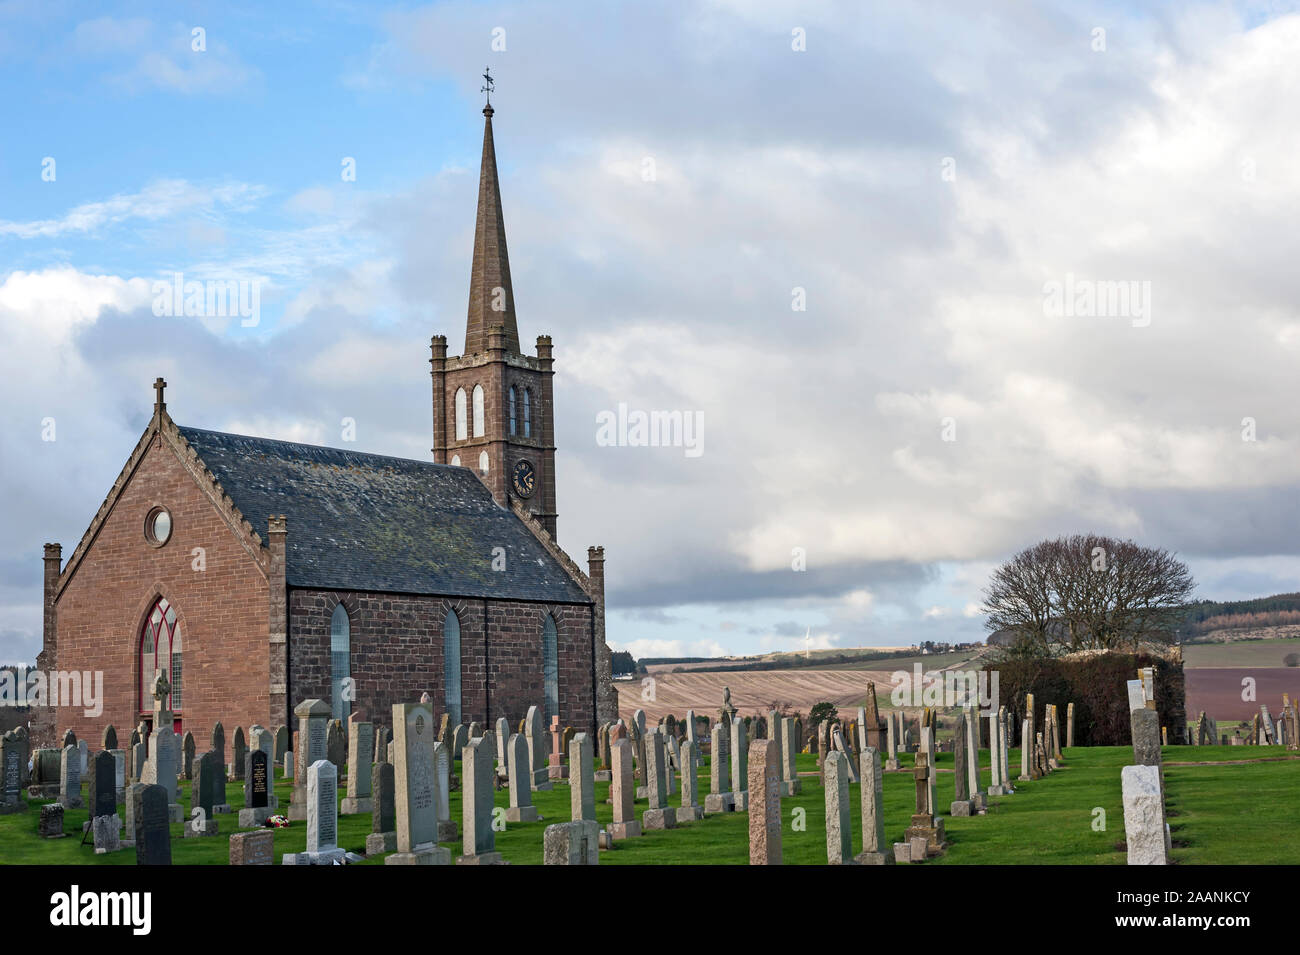 Mearns Coastal Parish, Church of Scotland, St. Cyrus Church with graveyard and gravestones, St. Cyrus, Aberdeenshire, Scotland, UK. Stock Photo